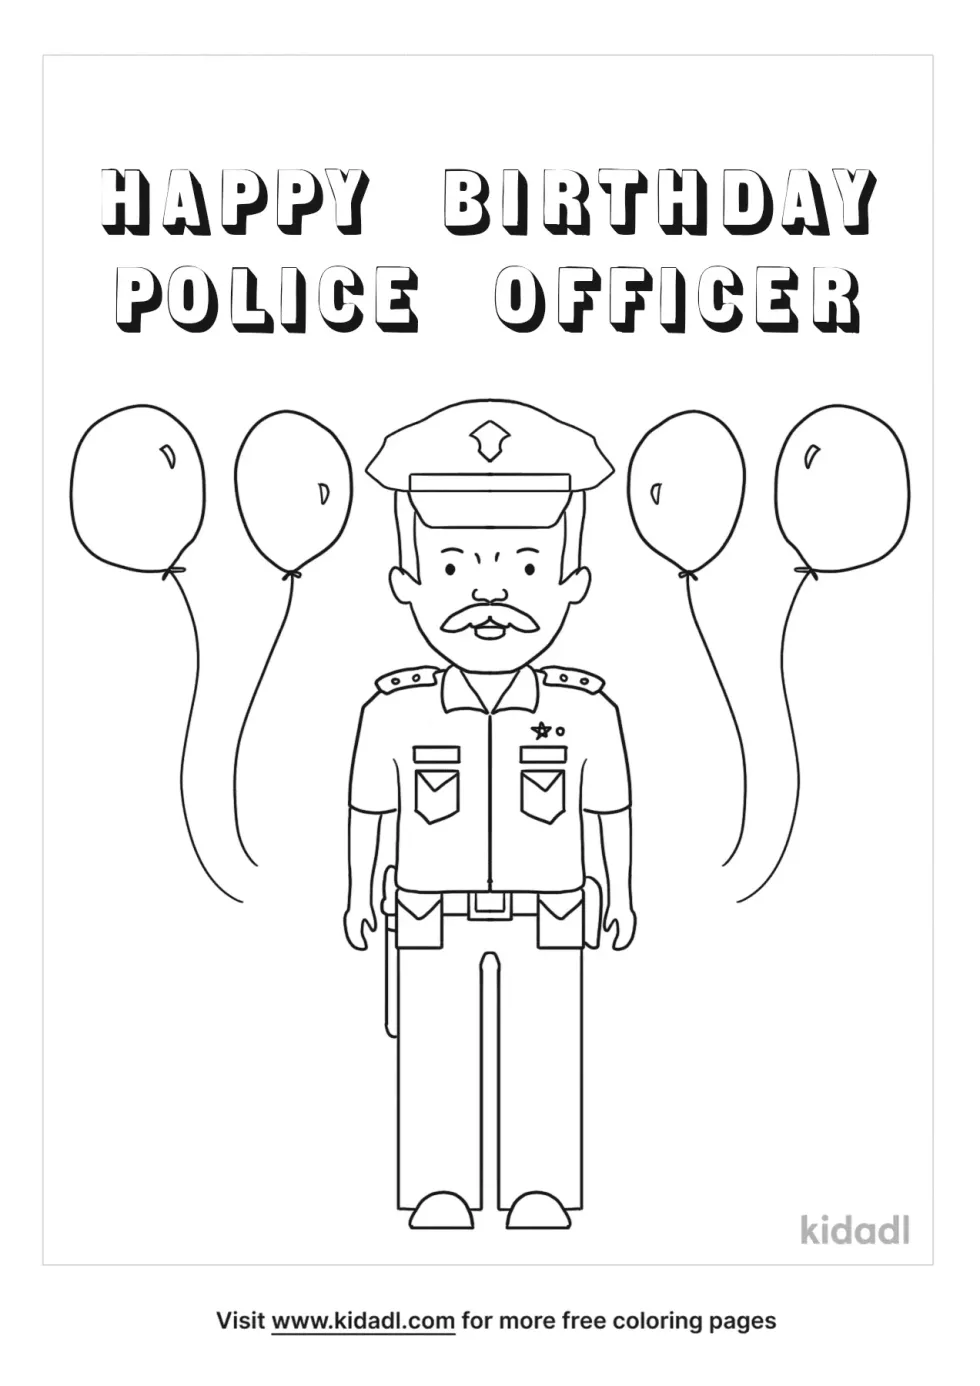 Happy Birthday Police Officer